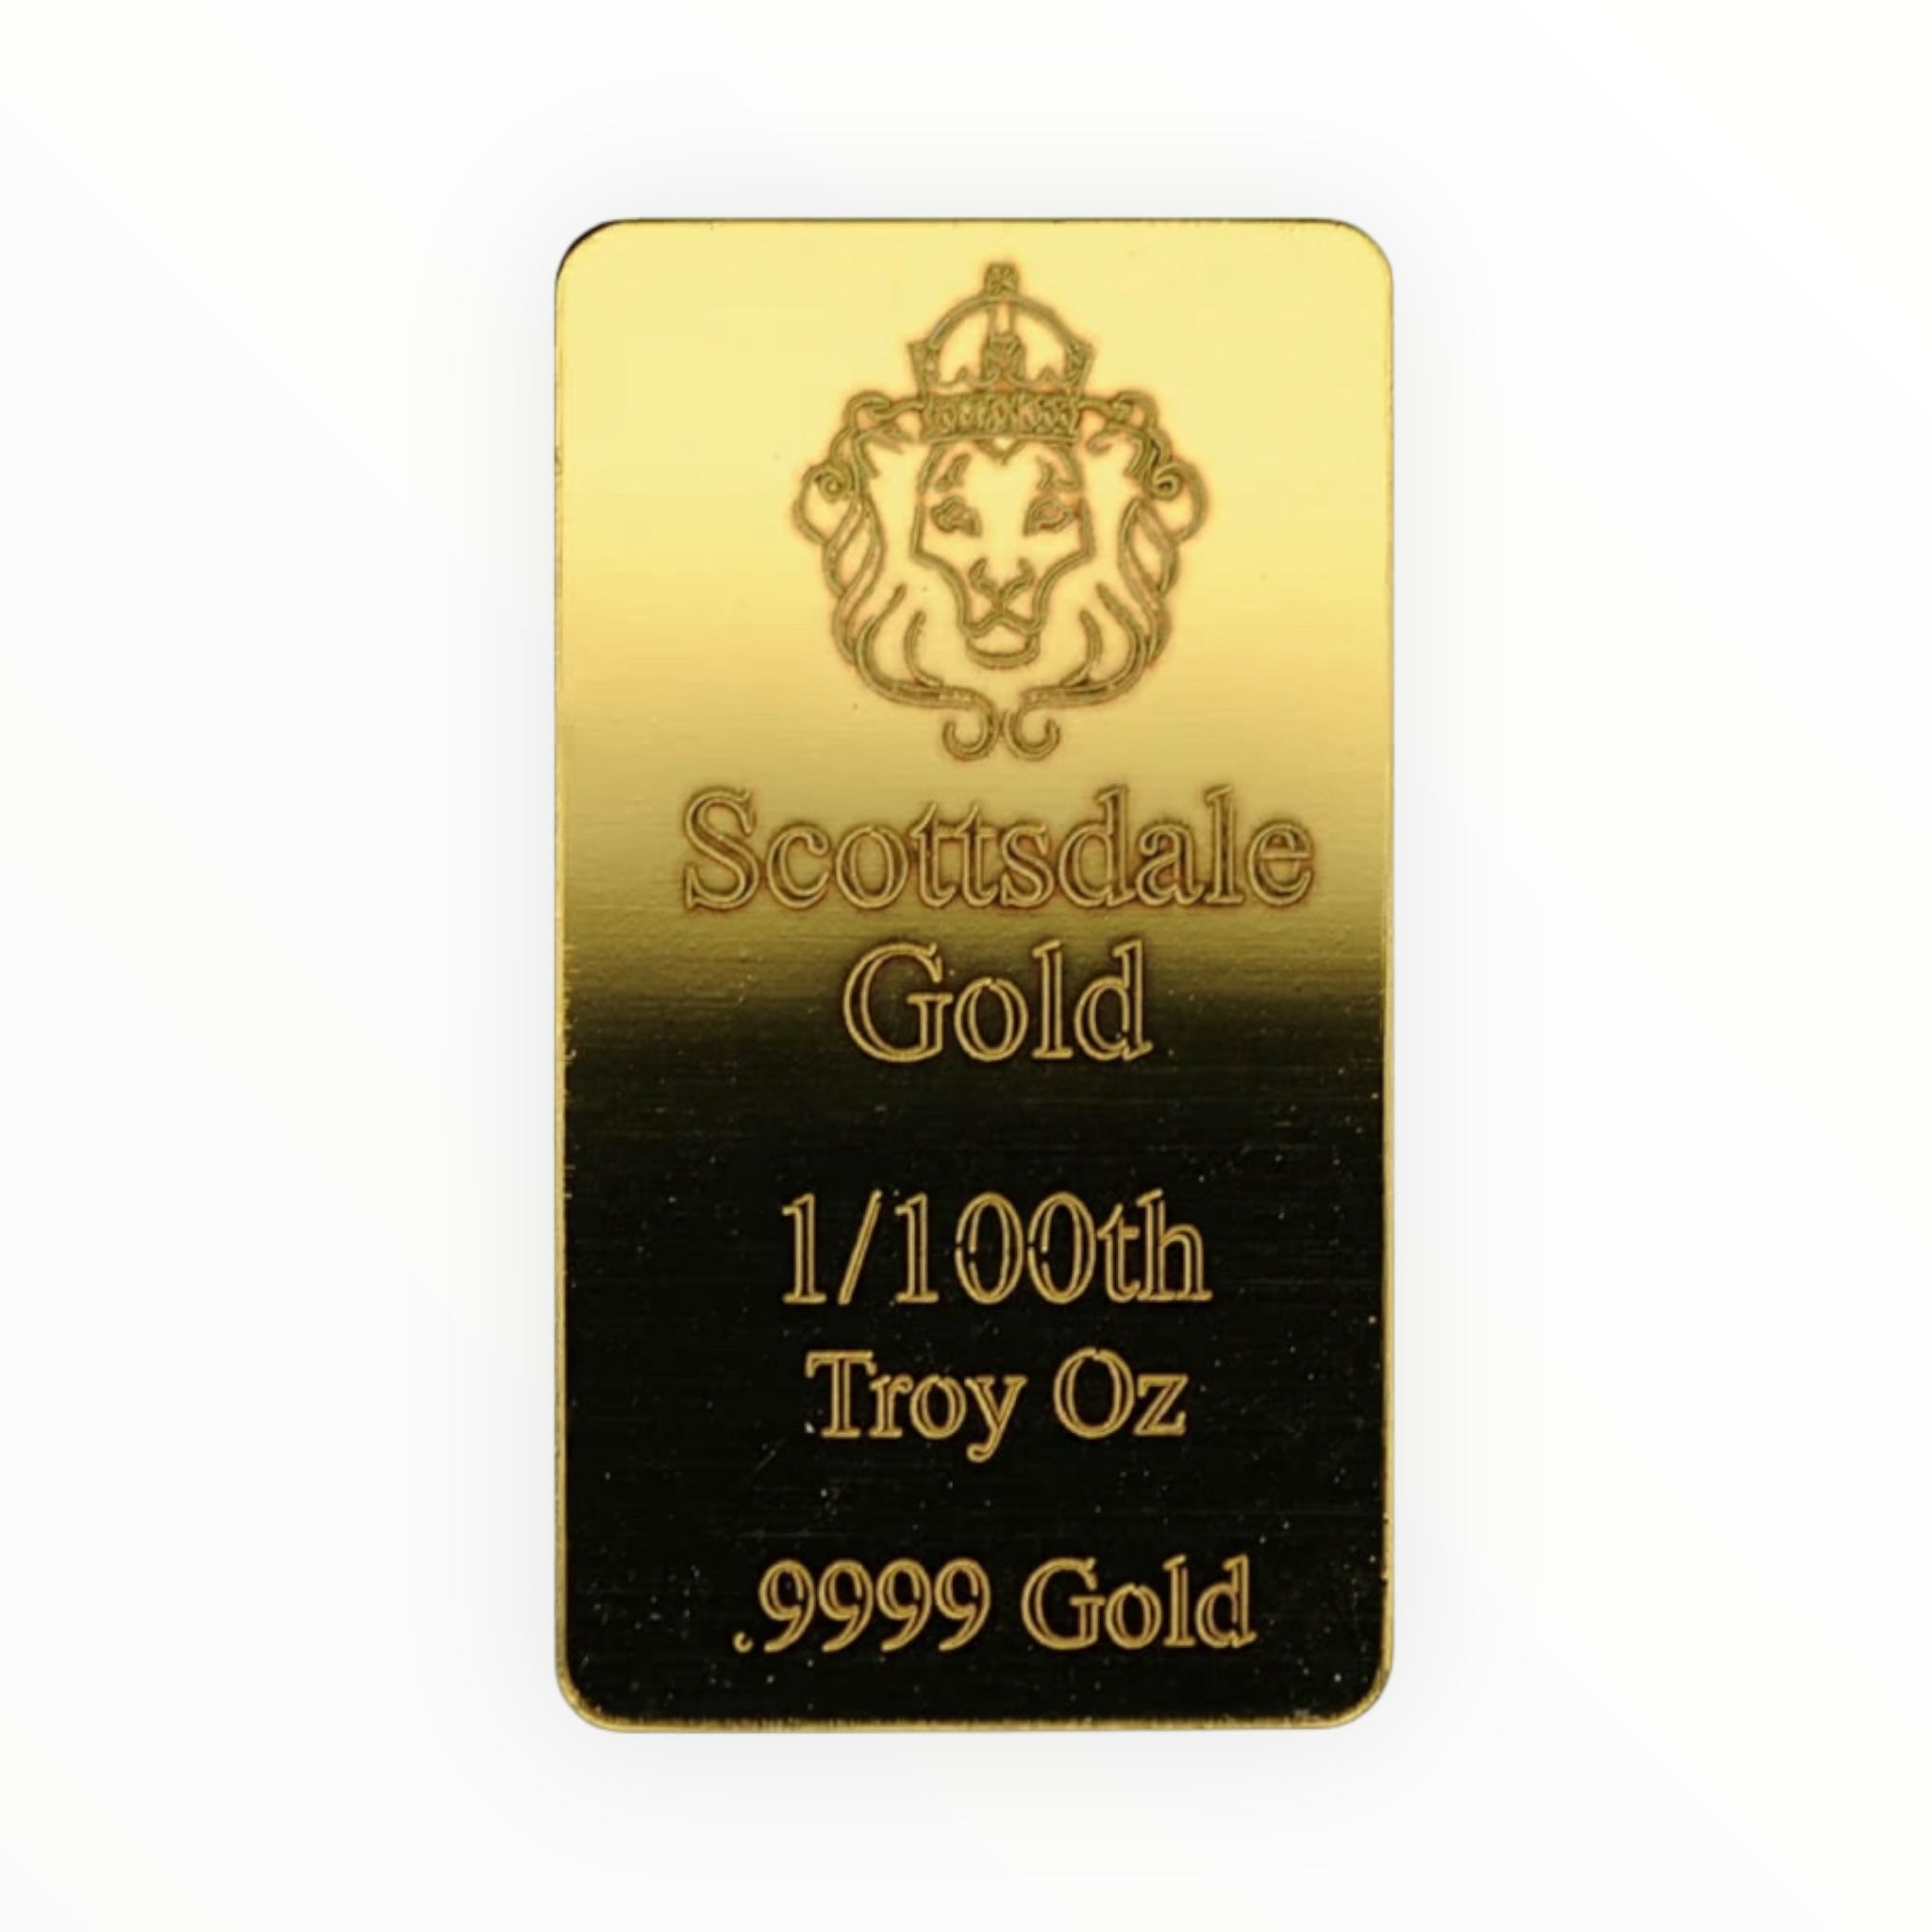 Scottsdale Gold -
1/100th Oz Bar